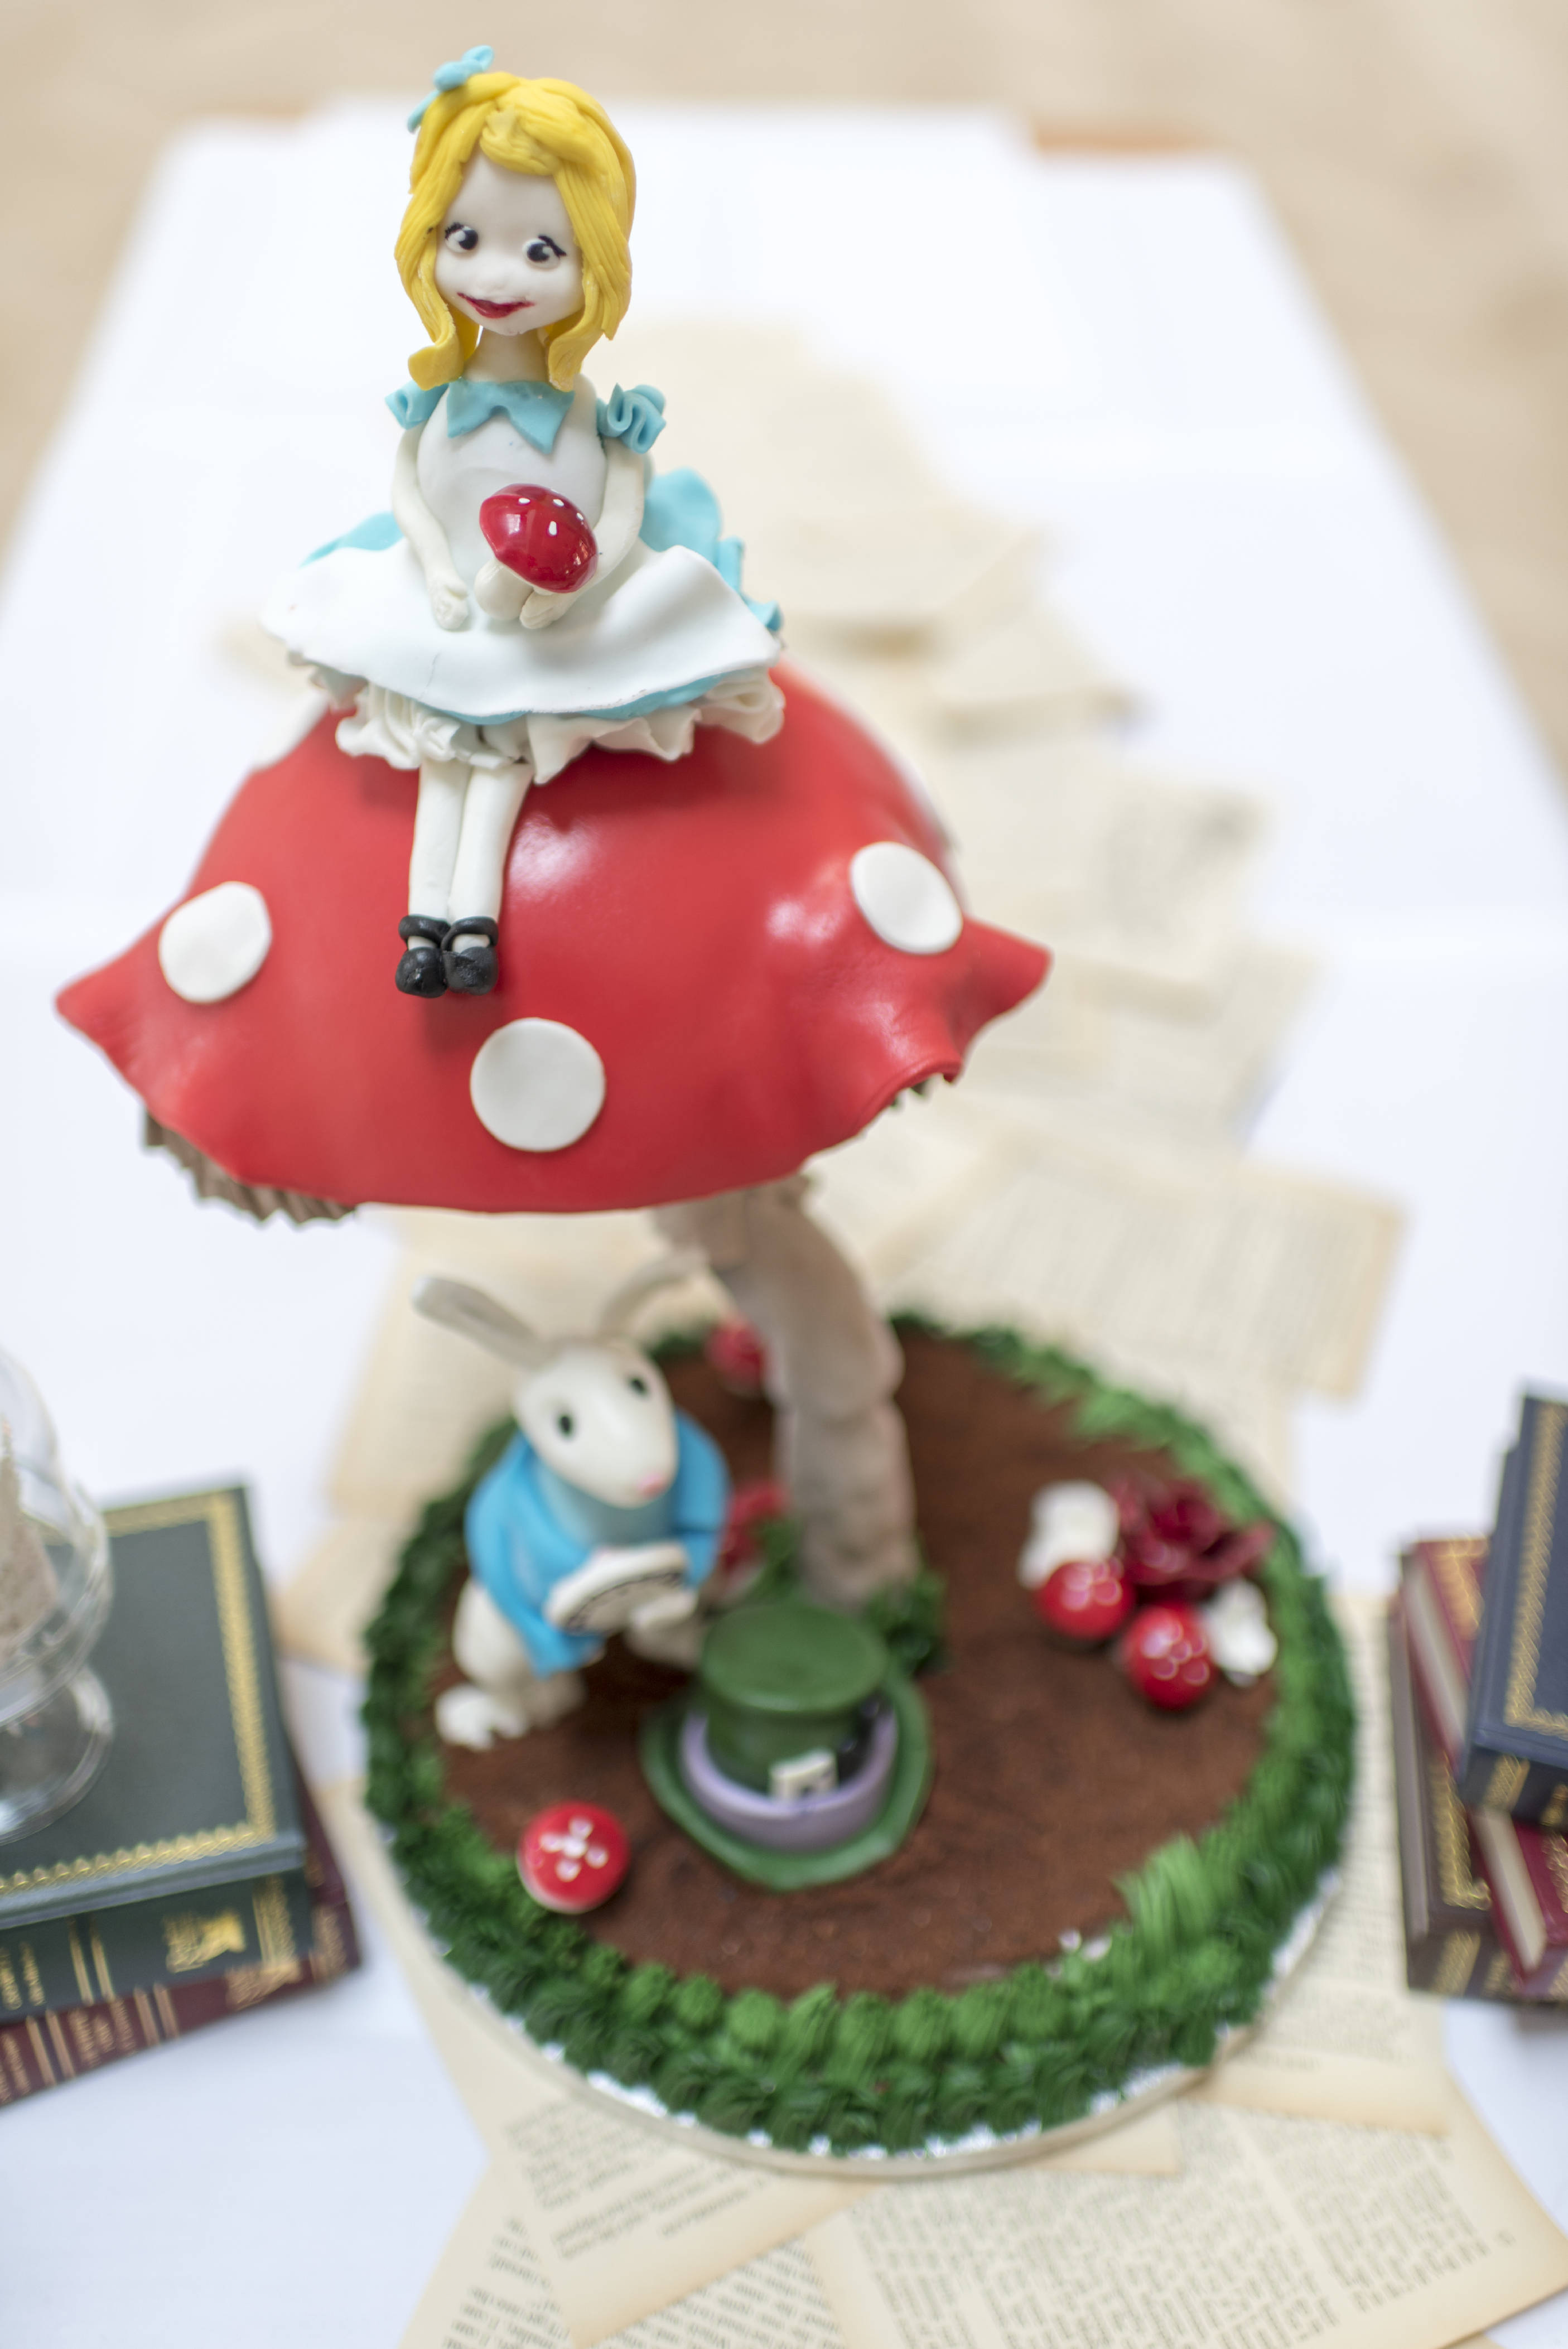 Alice in Wonderland wedding inspiration - cake - alternative and unconventional wedding